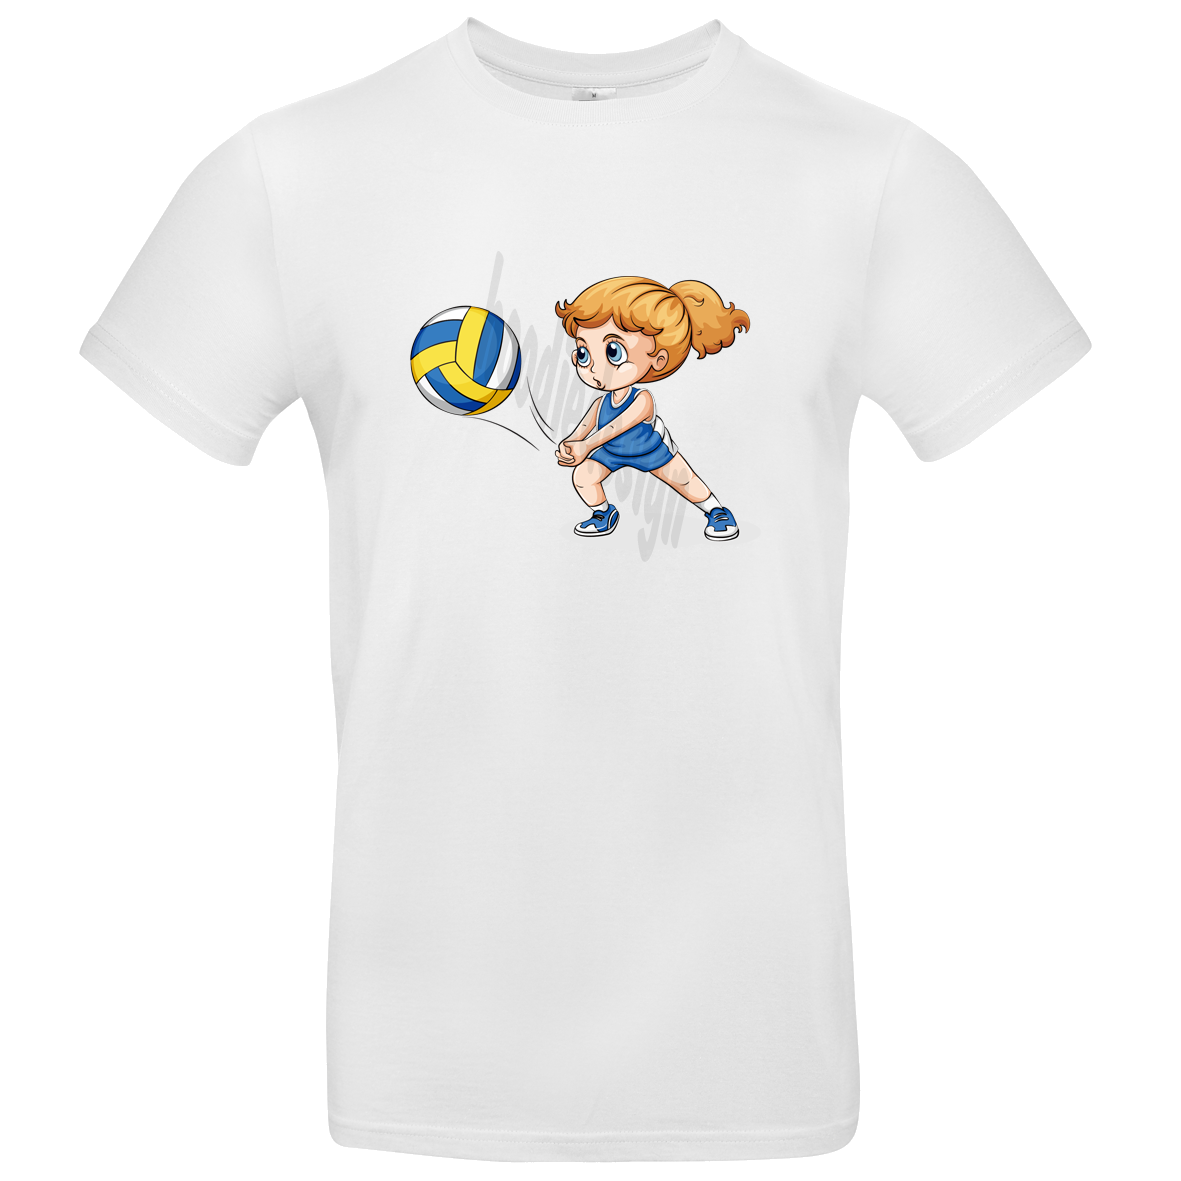 Kinder T Shirt mit Volleyball Girl 104 - 158